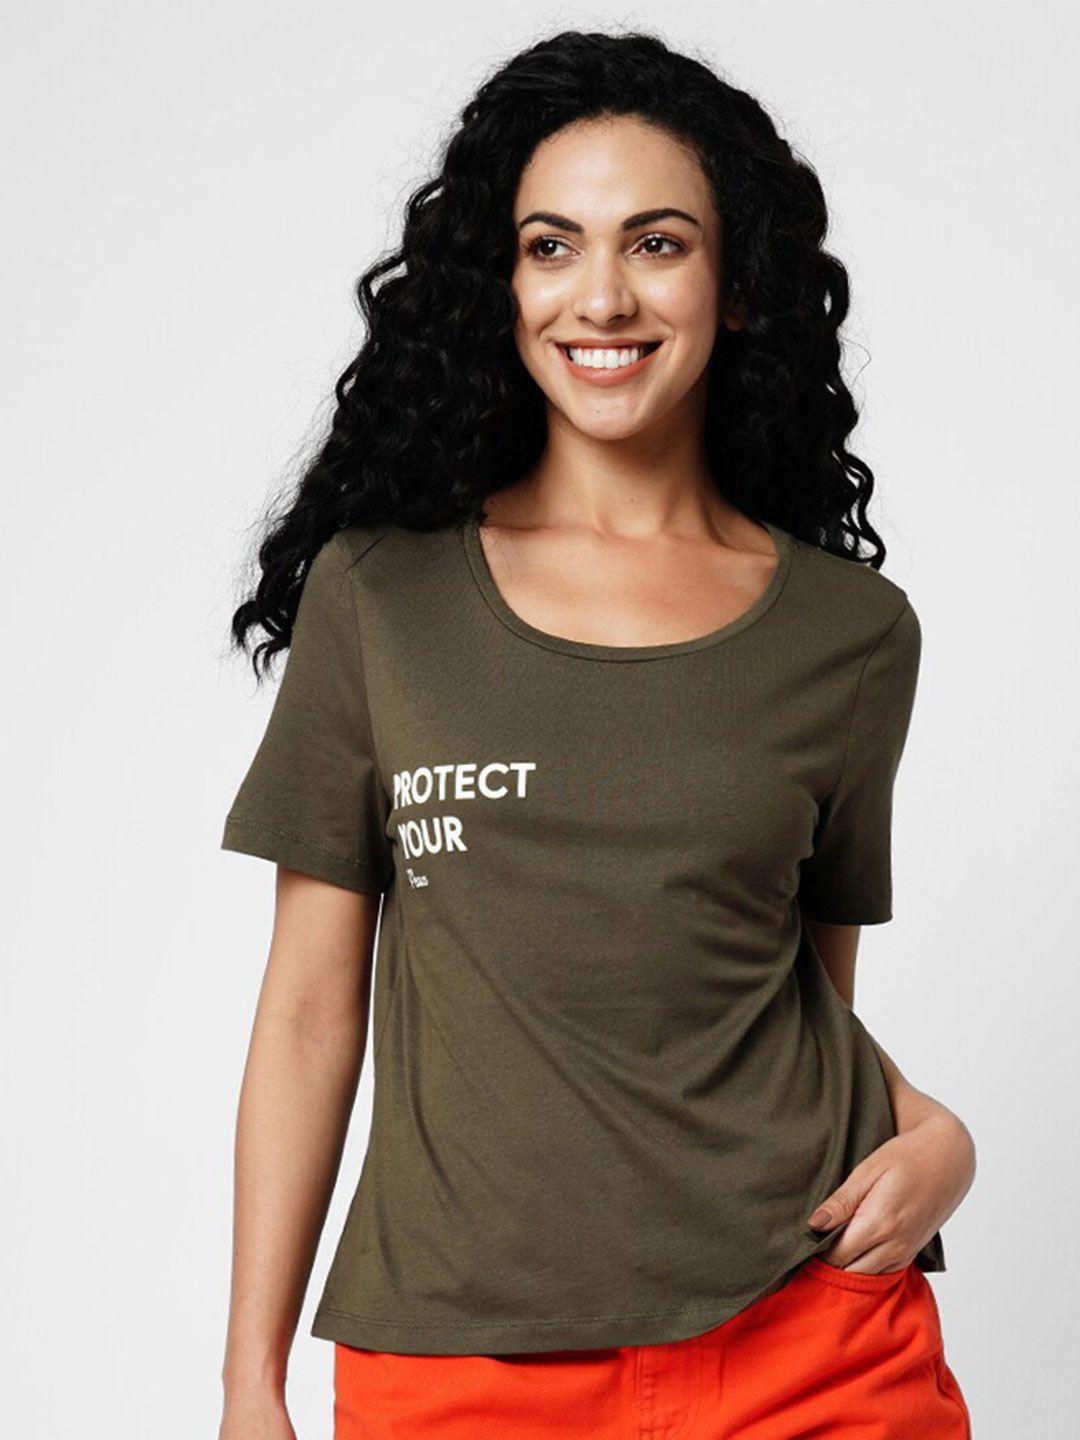 vero moda women olive green typography printed t-shirt